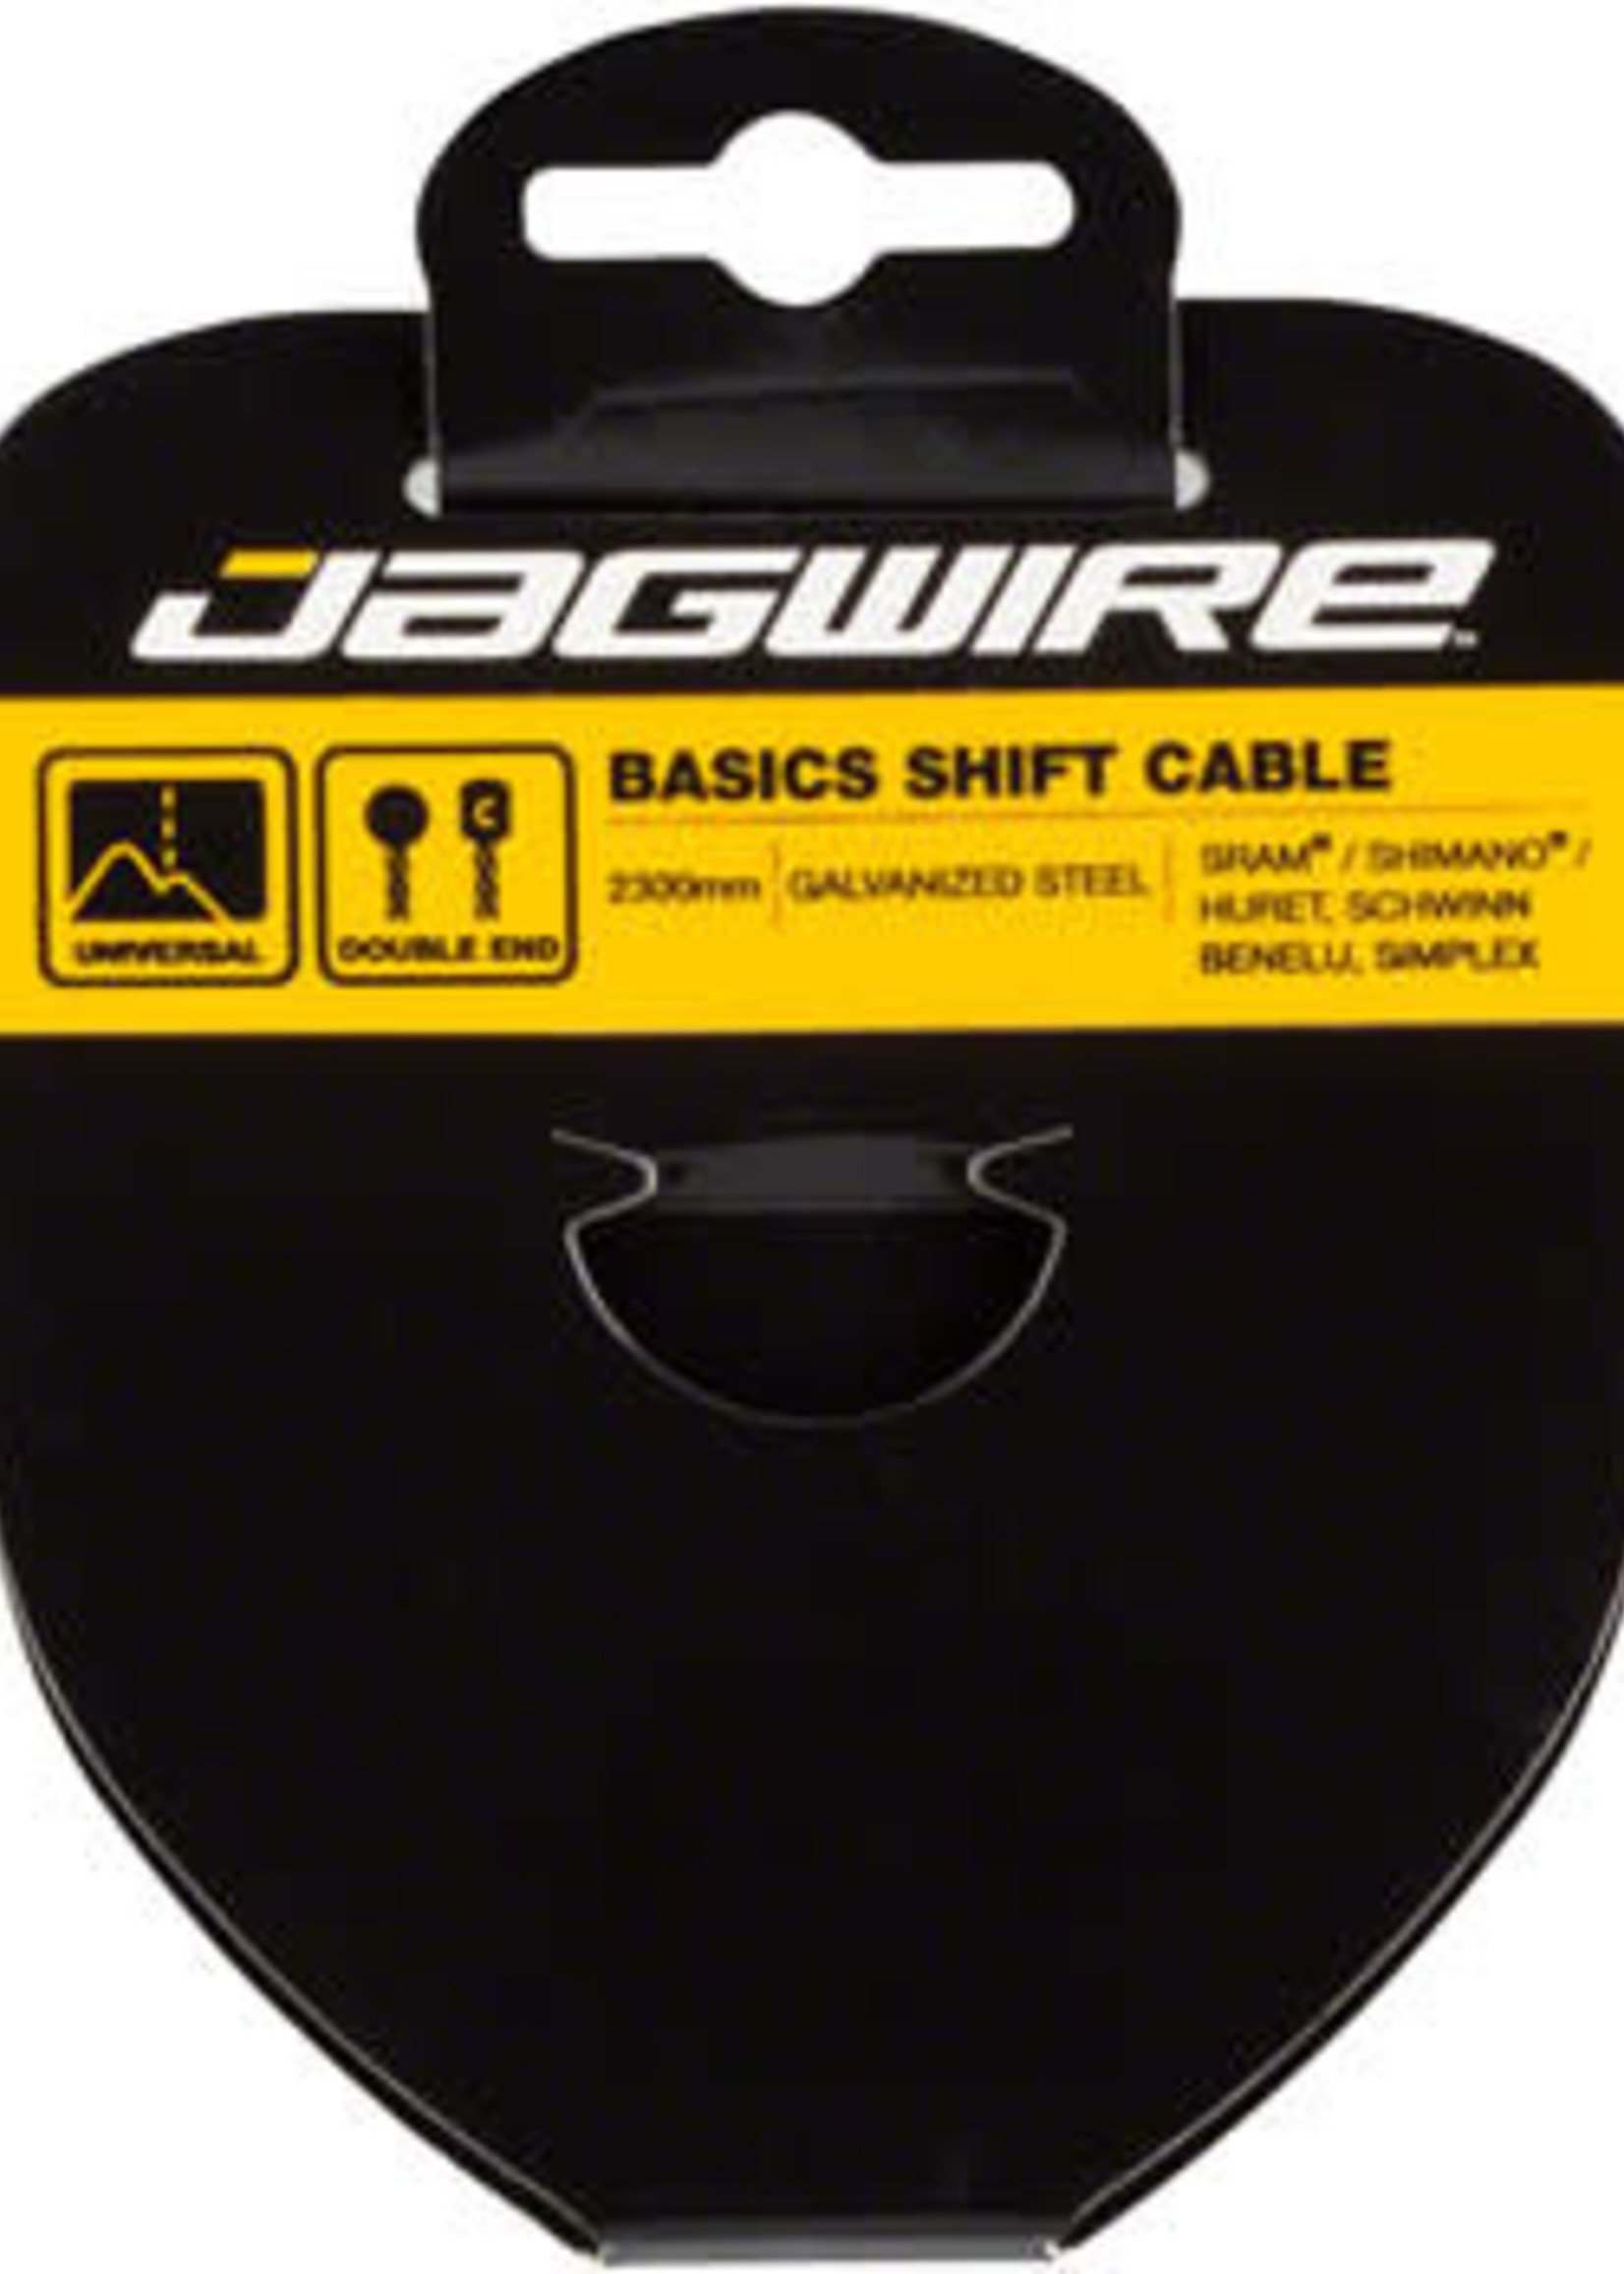 Jagwire Jagwire Basics Shift Cable - 1.2 x 2300mm, Galvanized Steel, For Shimano/SRAM, Huret, Suntour X-Press